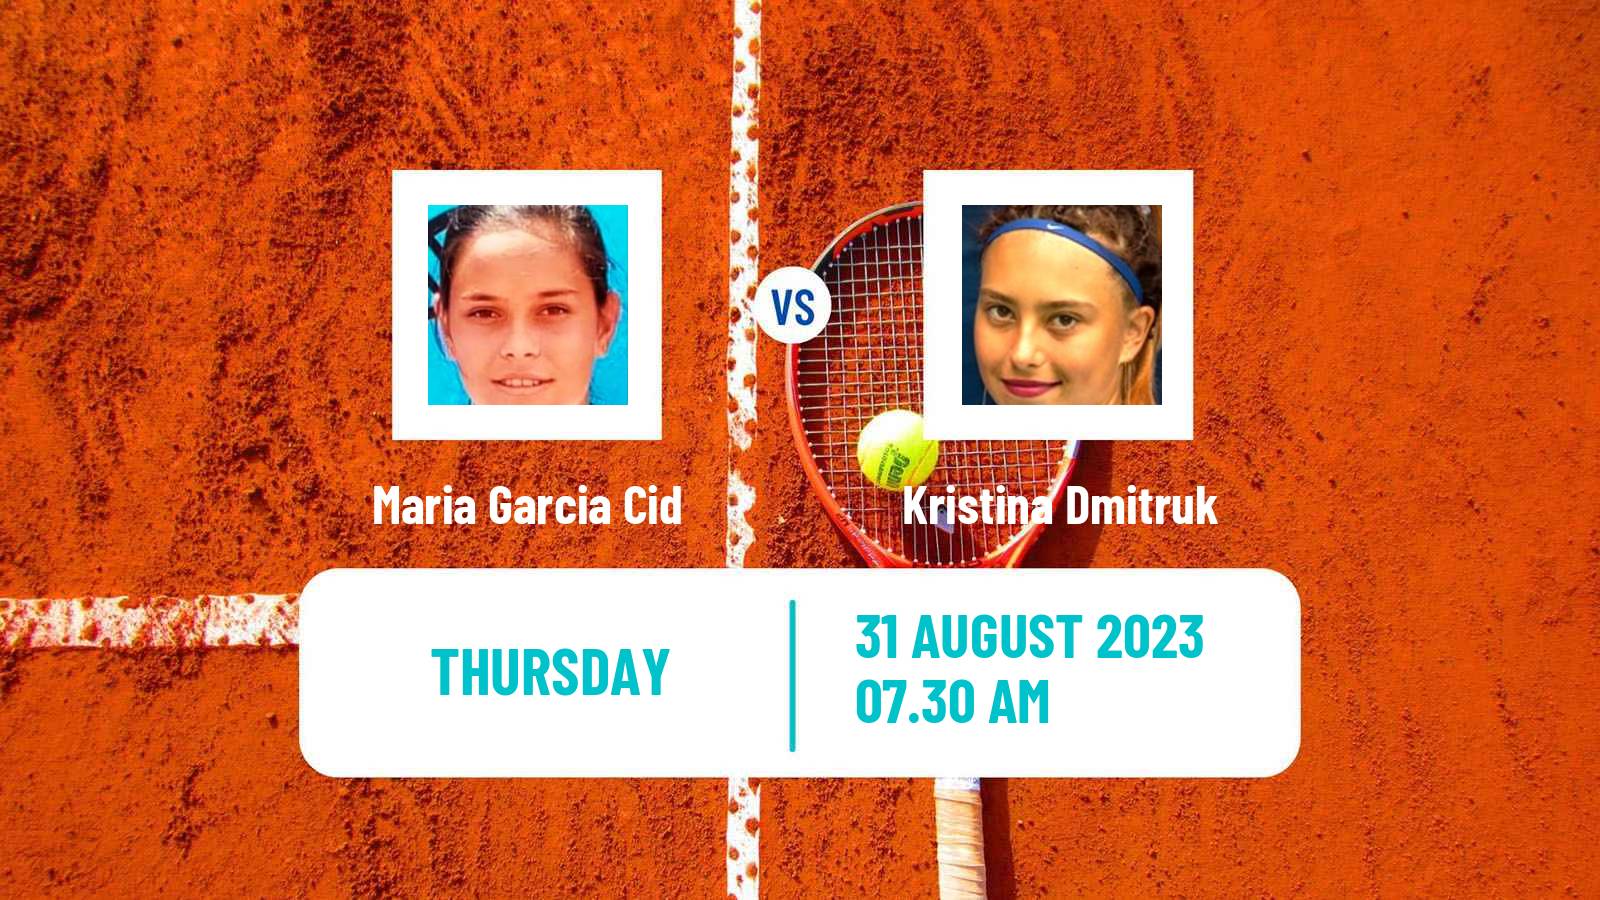 Tennis ITF W25 Valladolid Women Maria Garcia Cid - Kristina Dmitruk